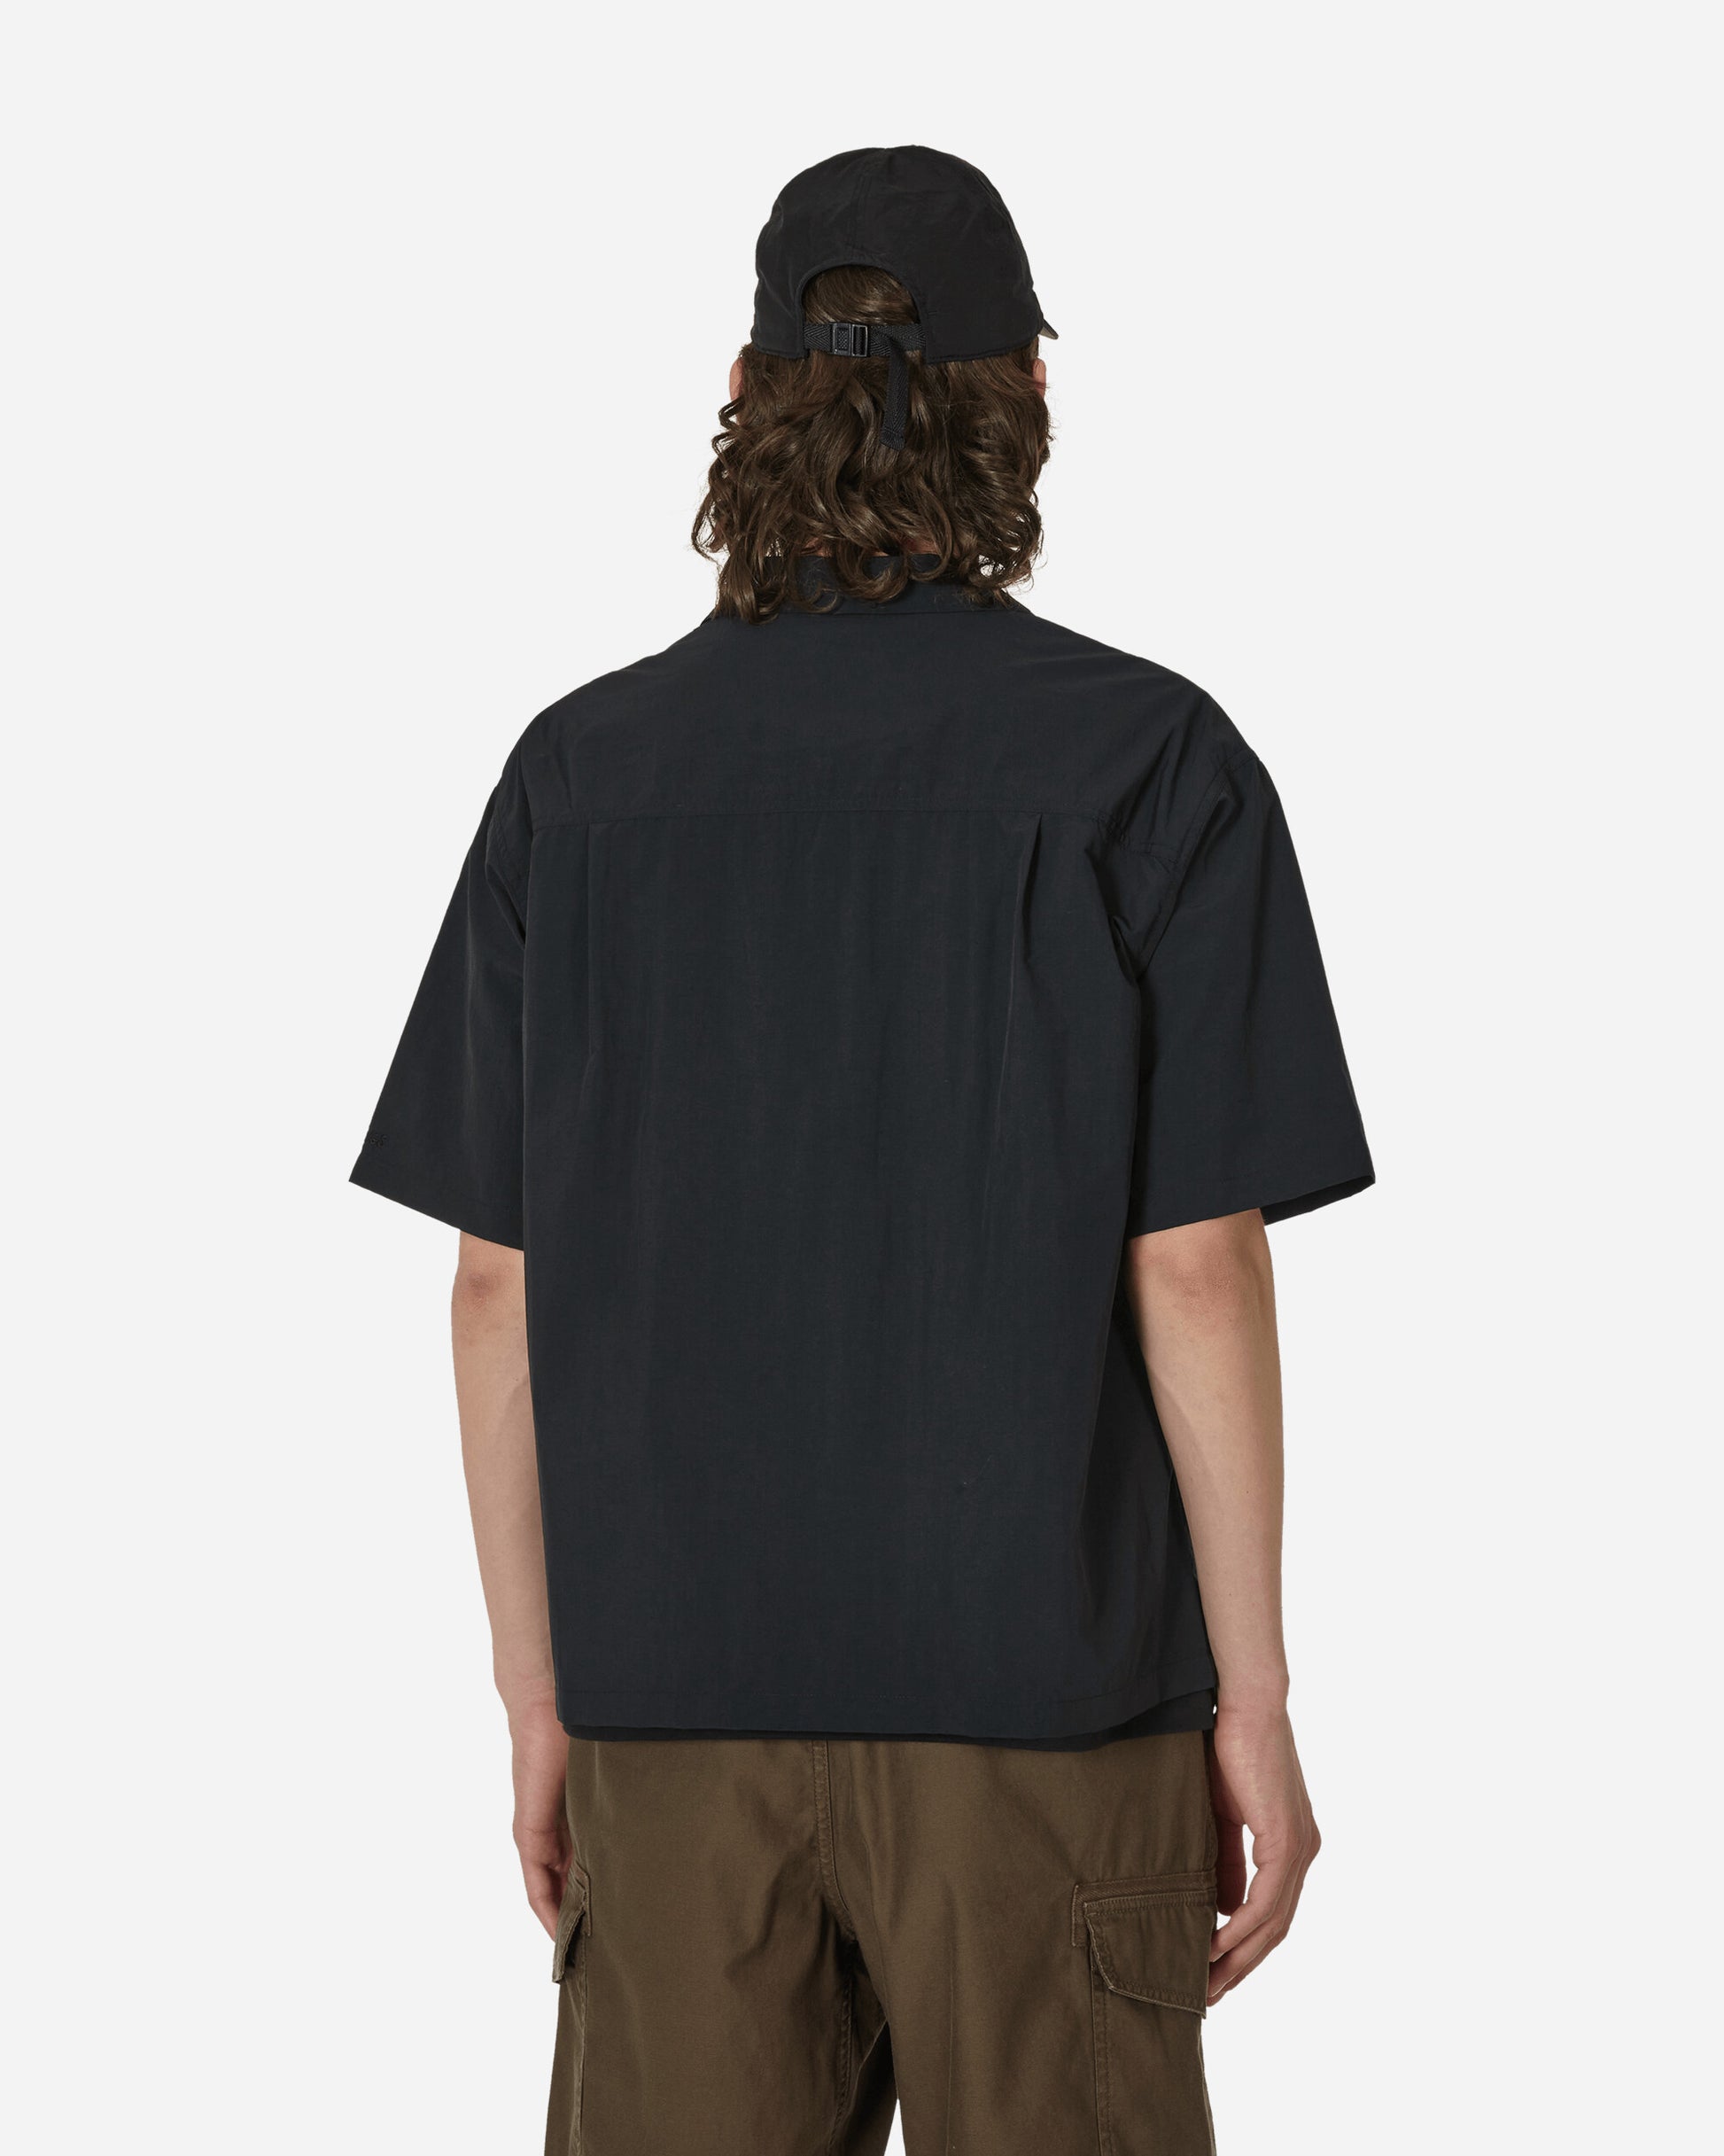 Wild Things Half Sleeve Camp Shirts Black Shirts Shortsleeve Shirt WT231-05 BLACK